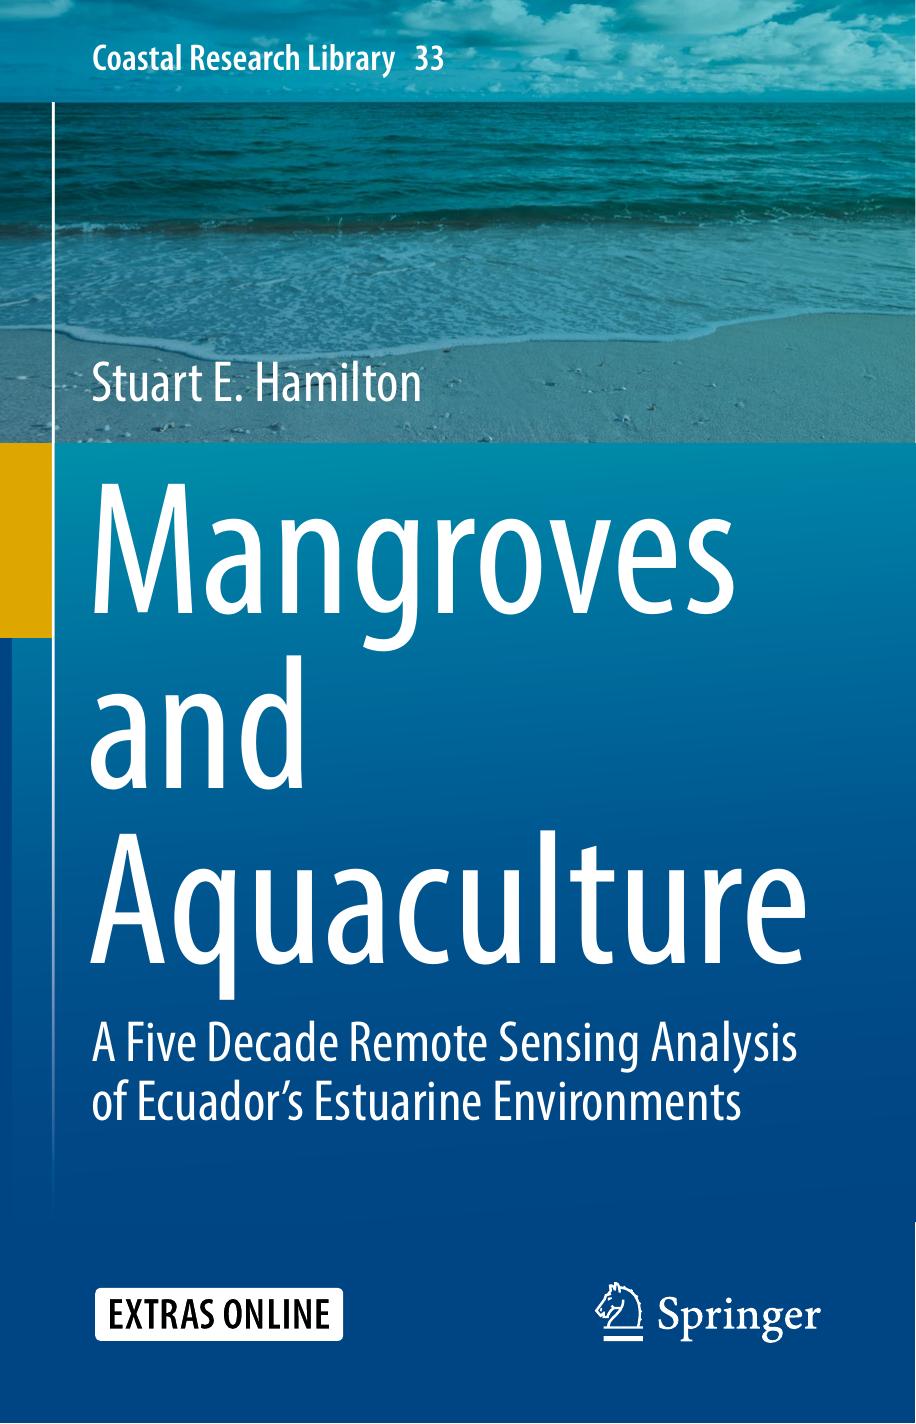 Mangroves and Aquaculture  A Five Decade Remote Sensing Analysis of Ecuador’s Estuarine Environments-Springer International Publishing (2020)